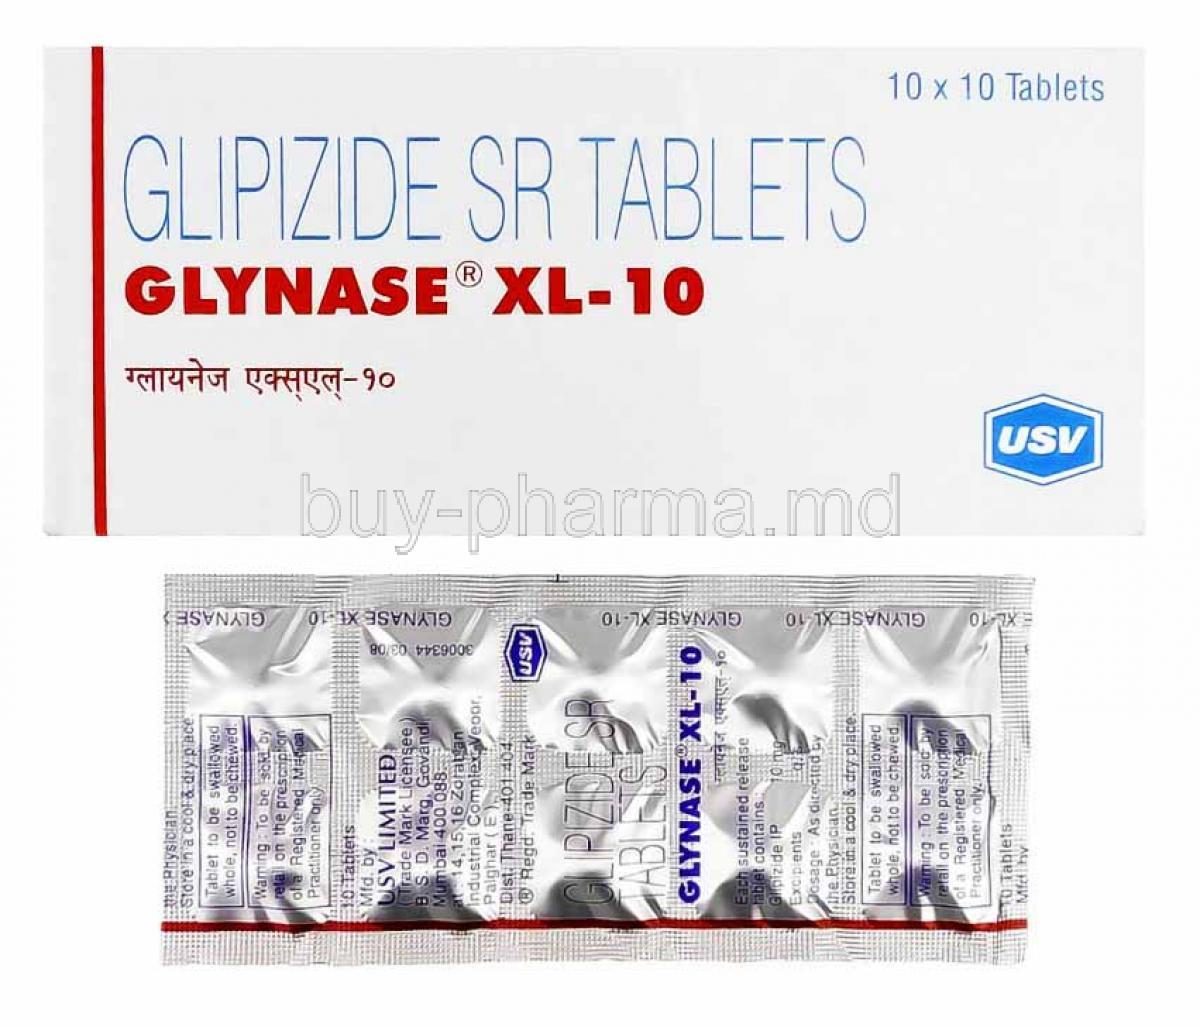 Glynase XL, Glipizide 10mg box and tablets